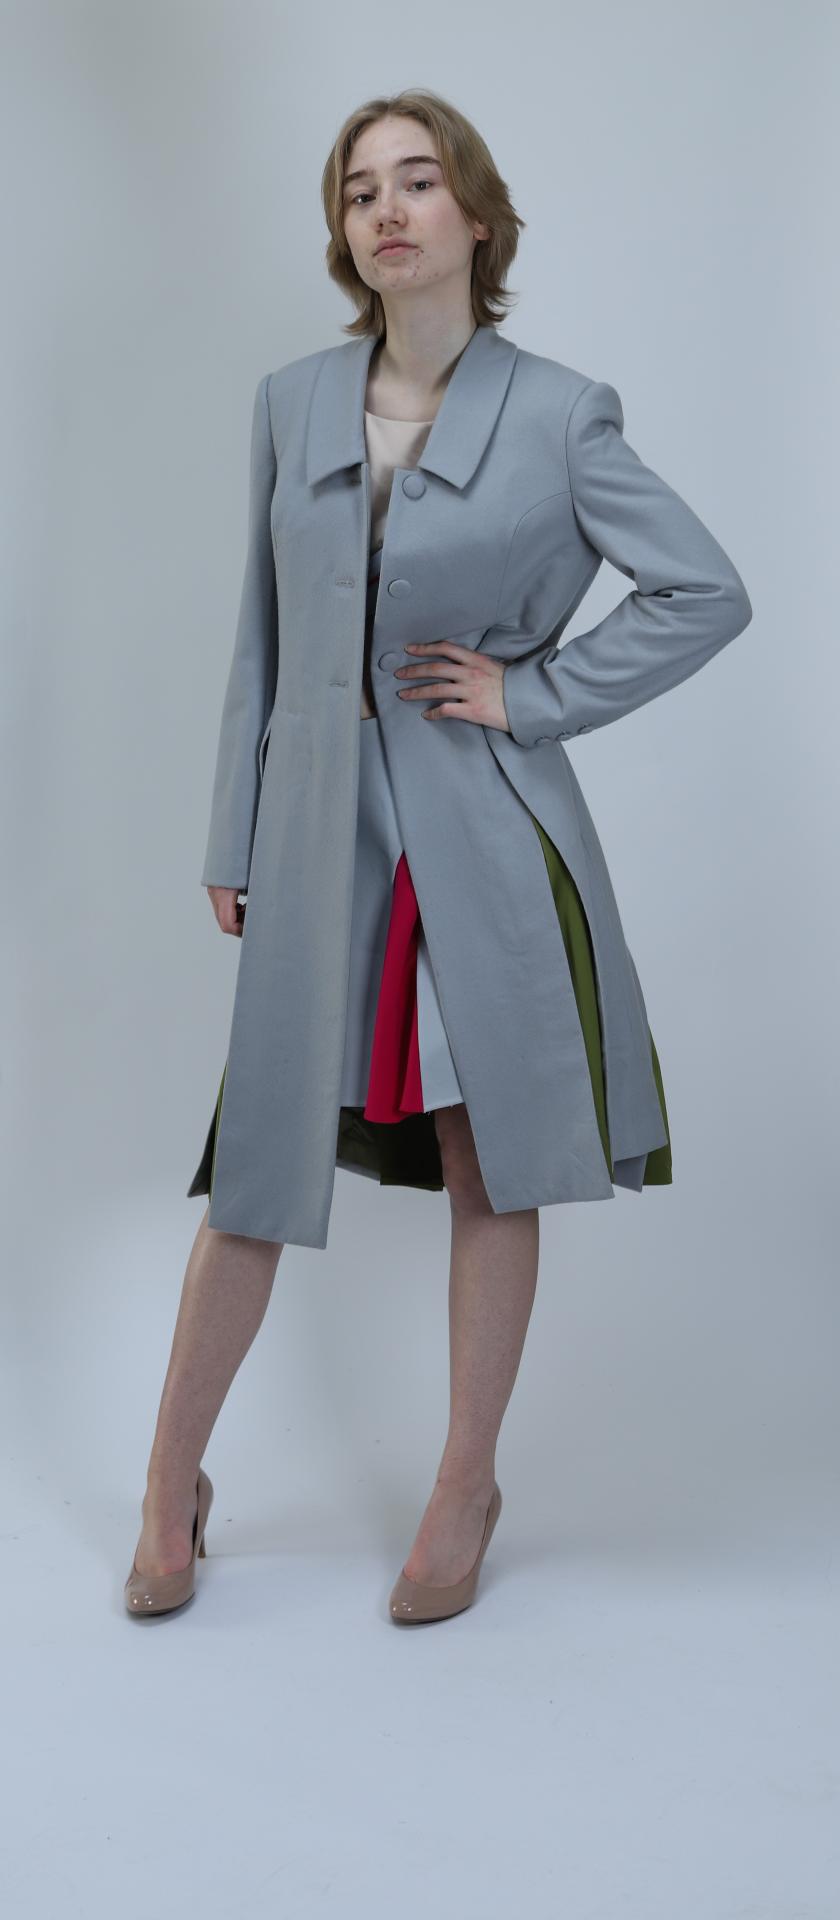 Philippa Aldridge-Ward | Fashion & Textiles 1